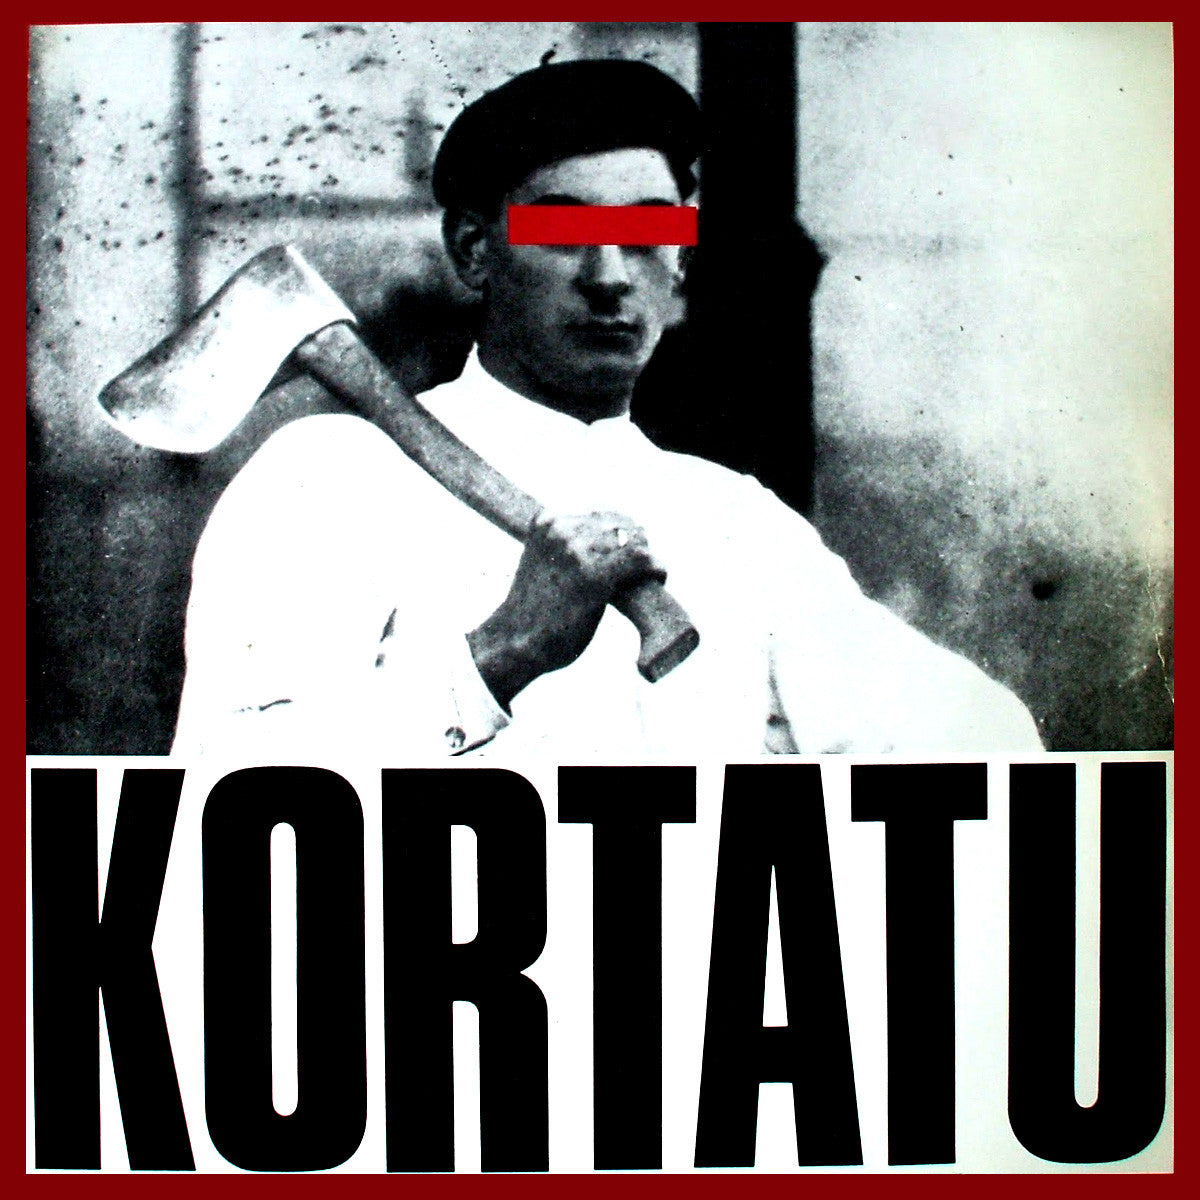 Kortatu - Archives de la Zone Mondiale